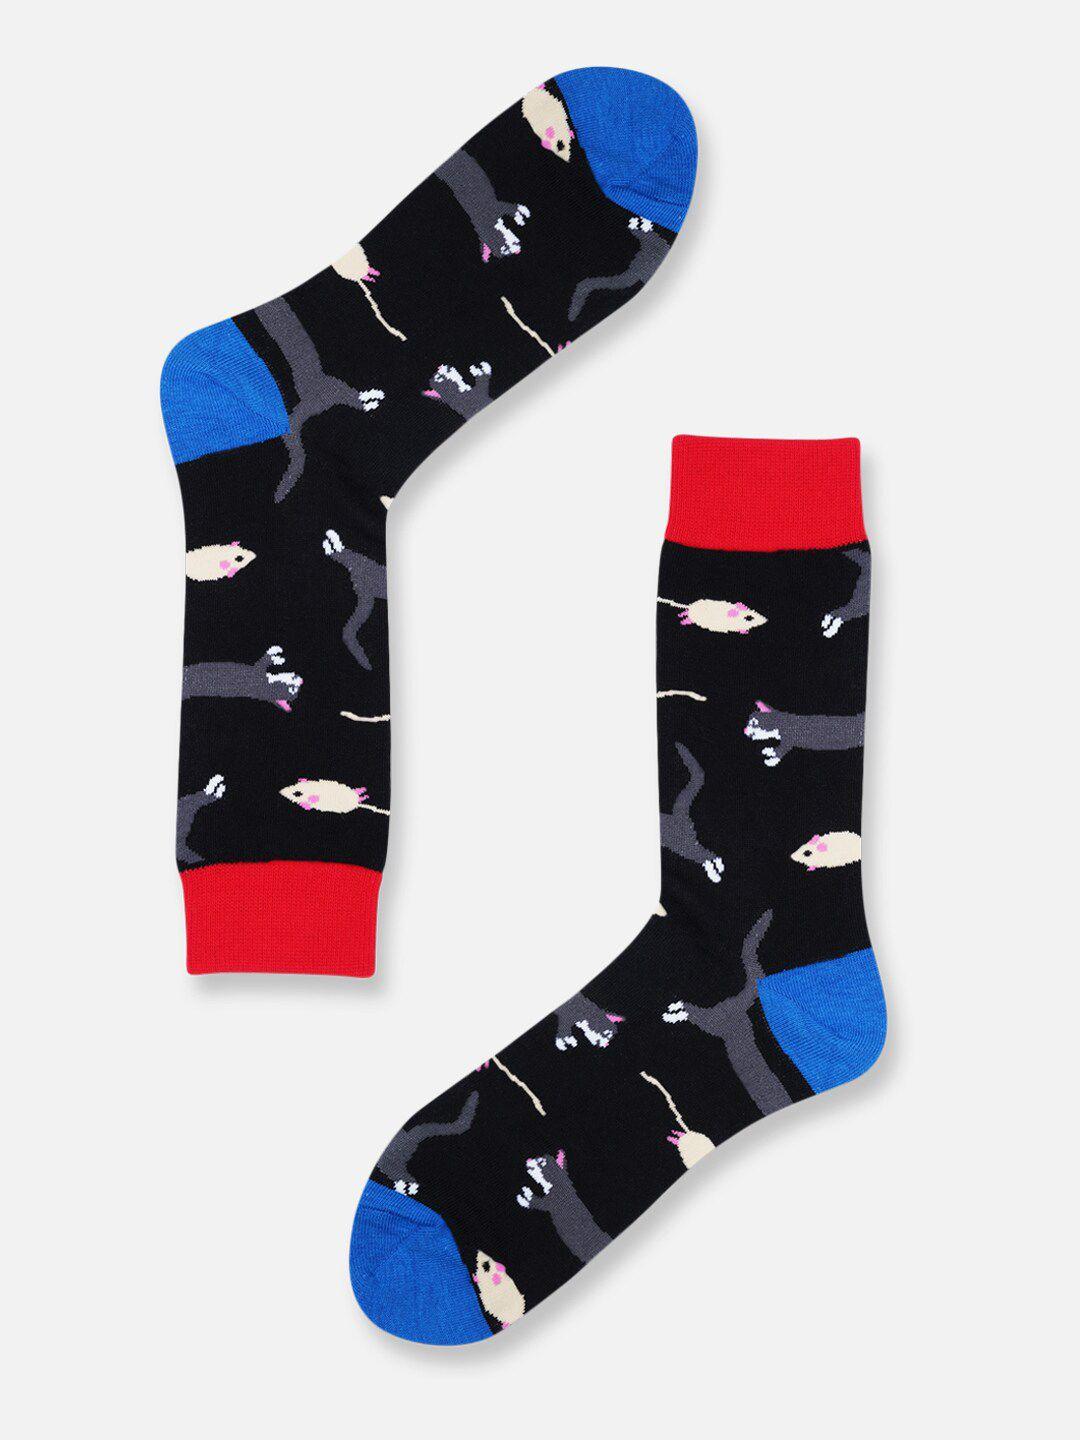 toffcraft-men-patterned-cotton-calf-length-socks